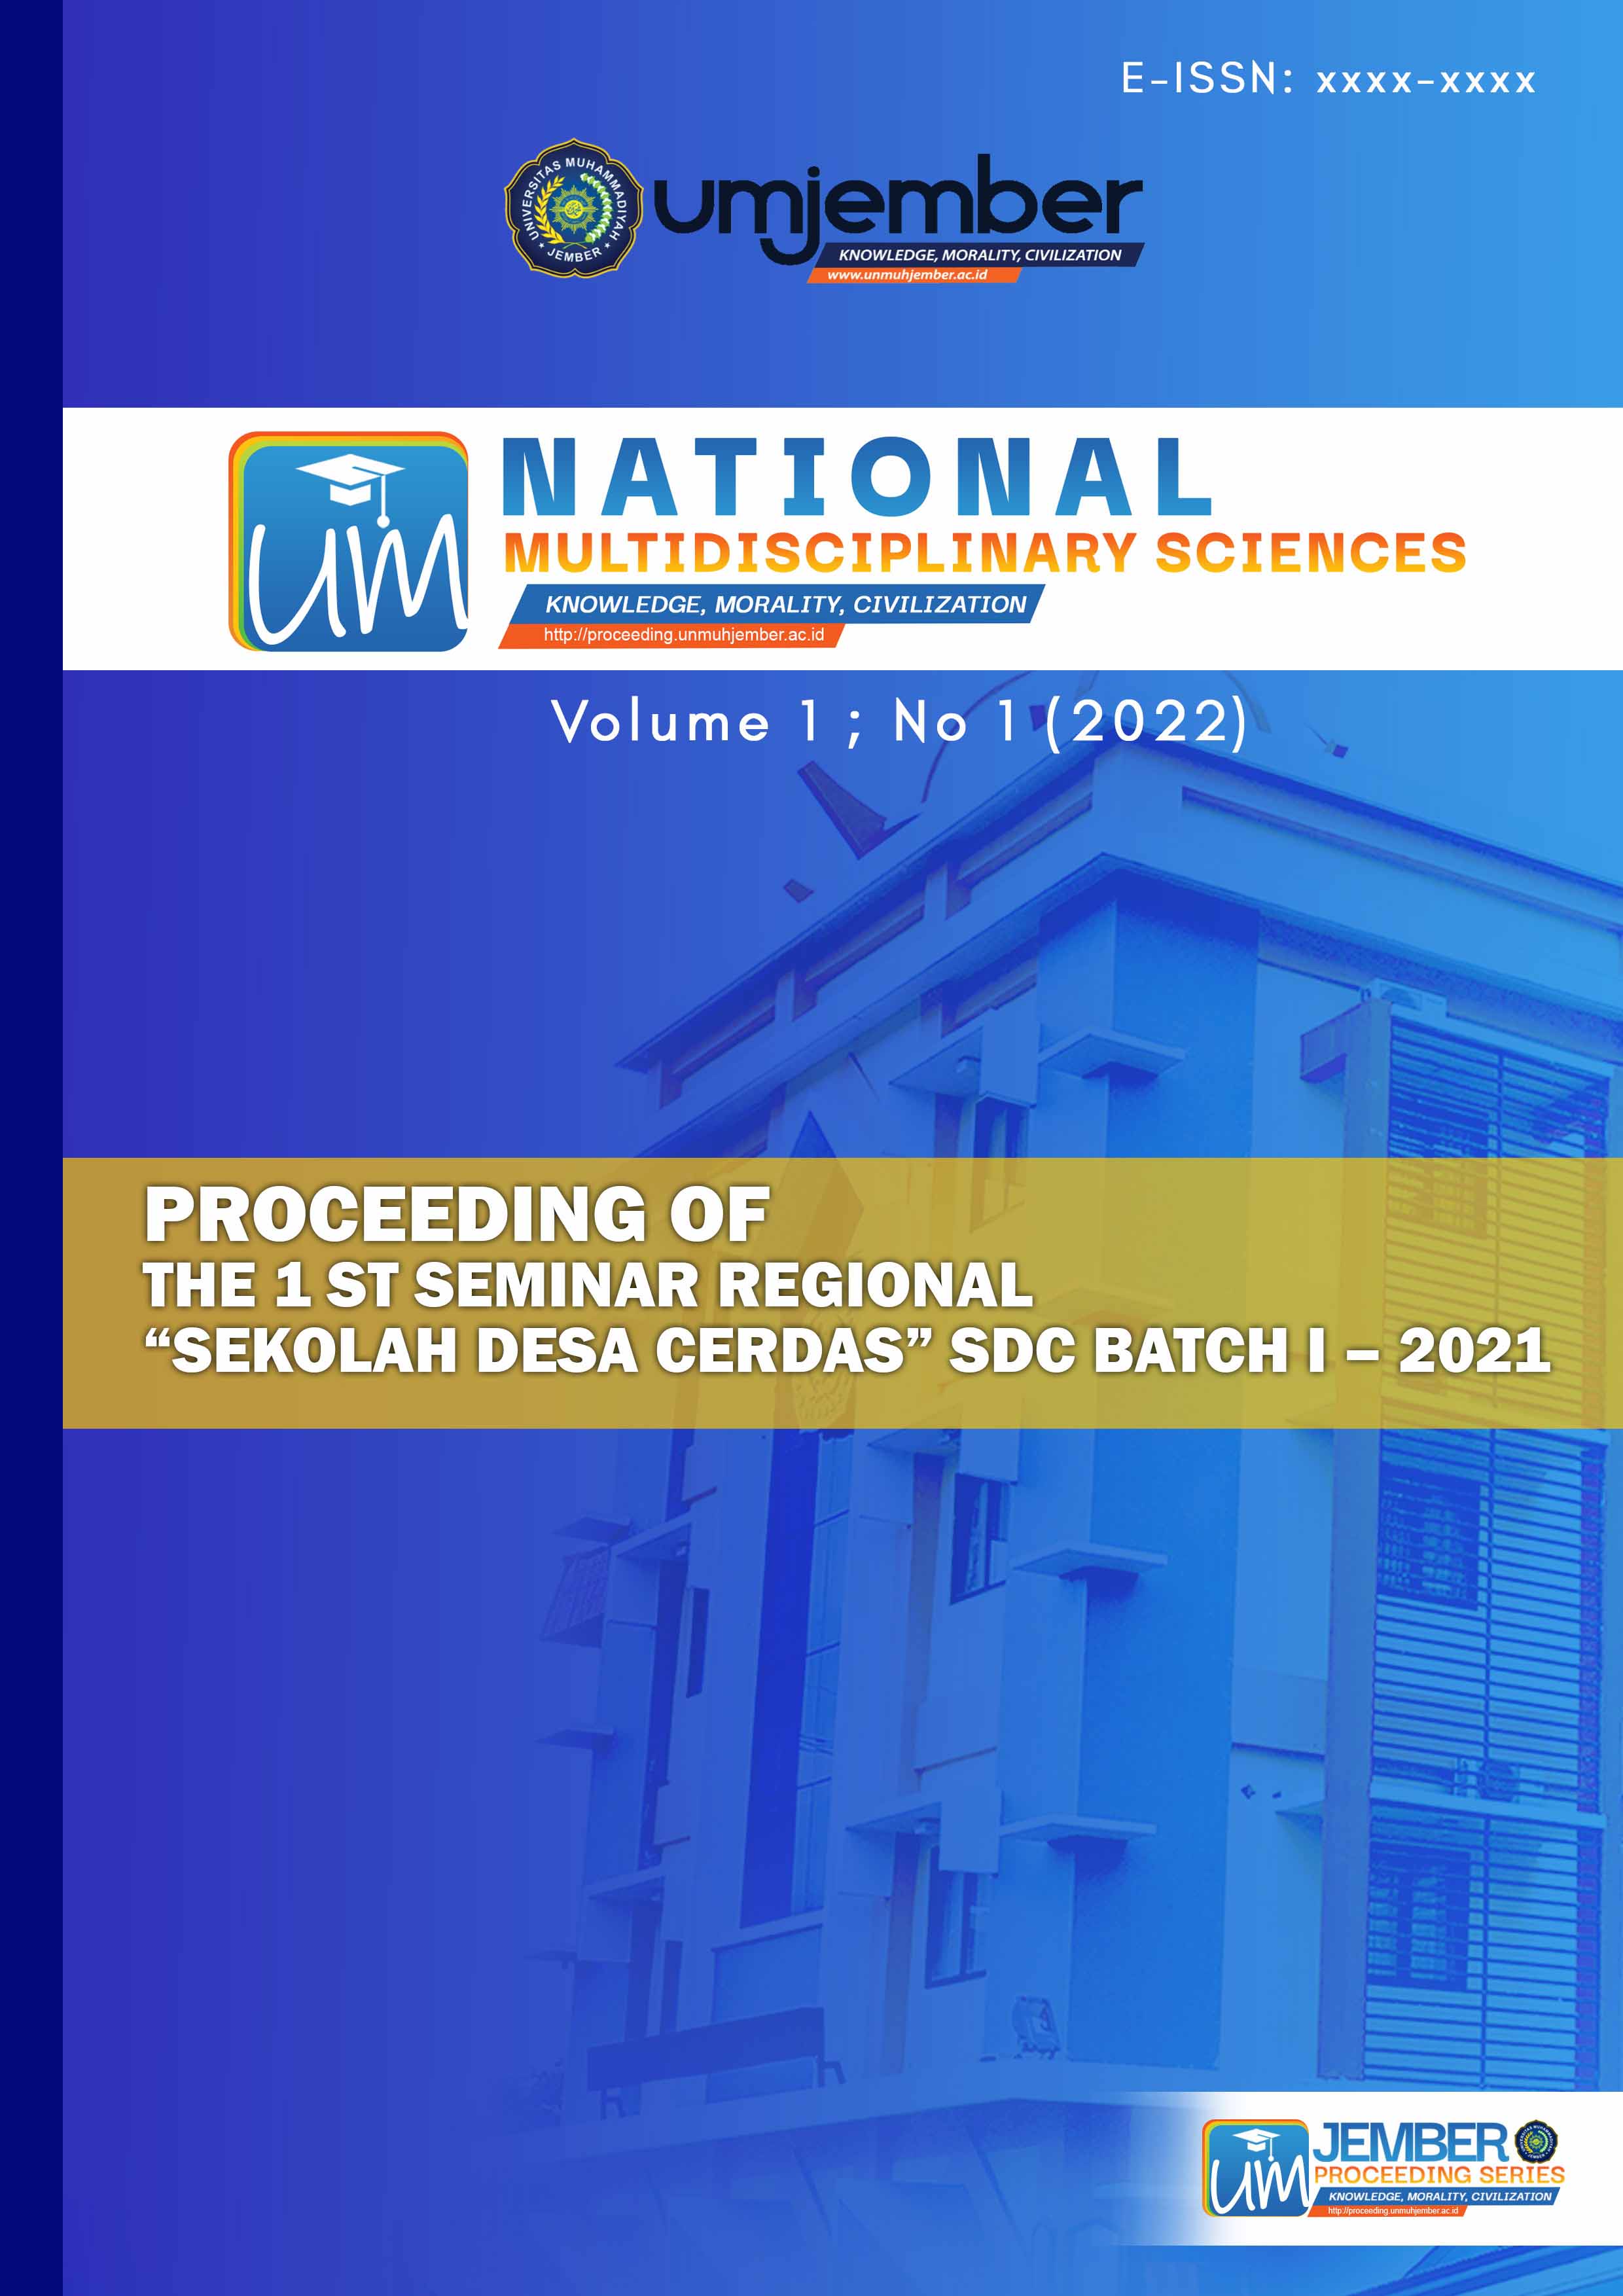 					View Vol. 1 No. 1 (2022): Proceeding SDC-Batch I
				